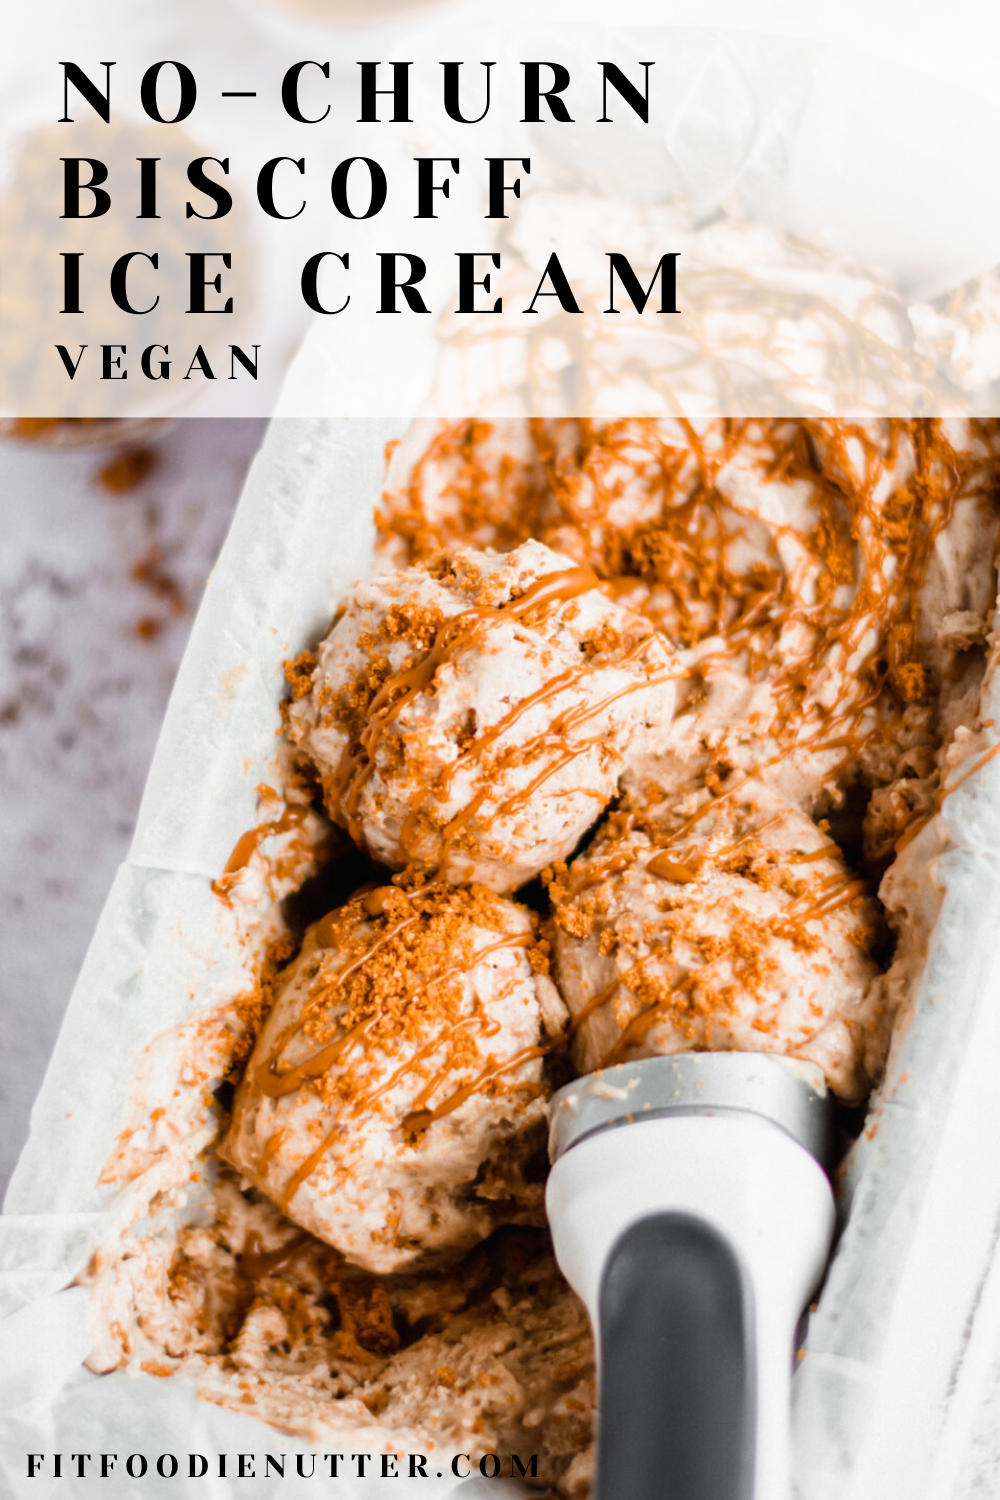 No-churn vegan Biscoff ice cream in container with ice cream scoop